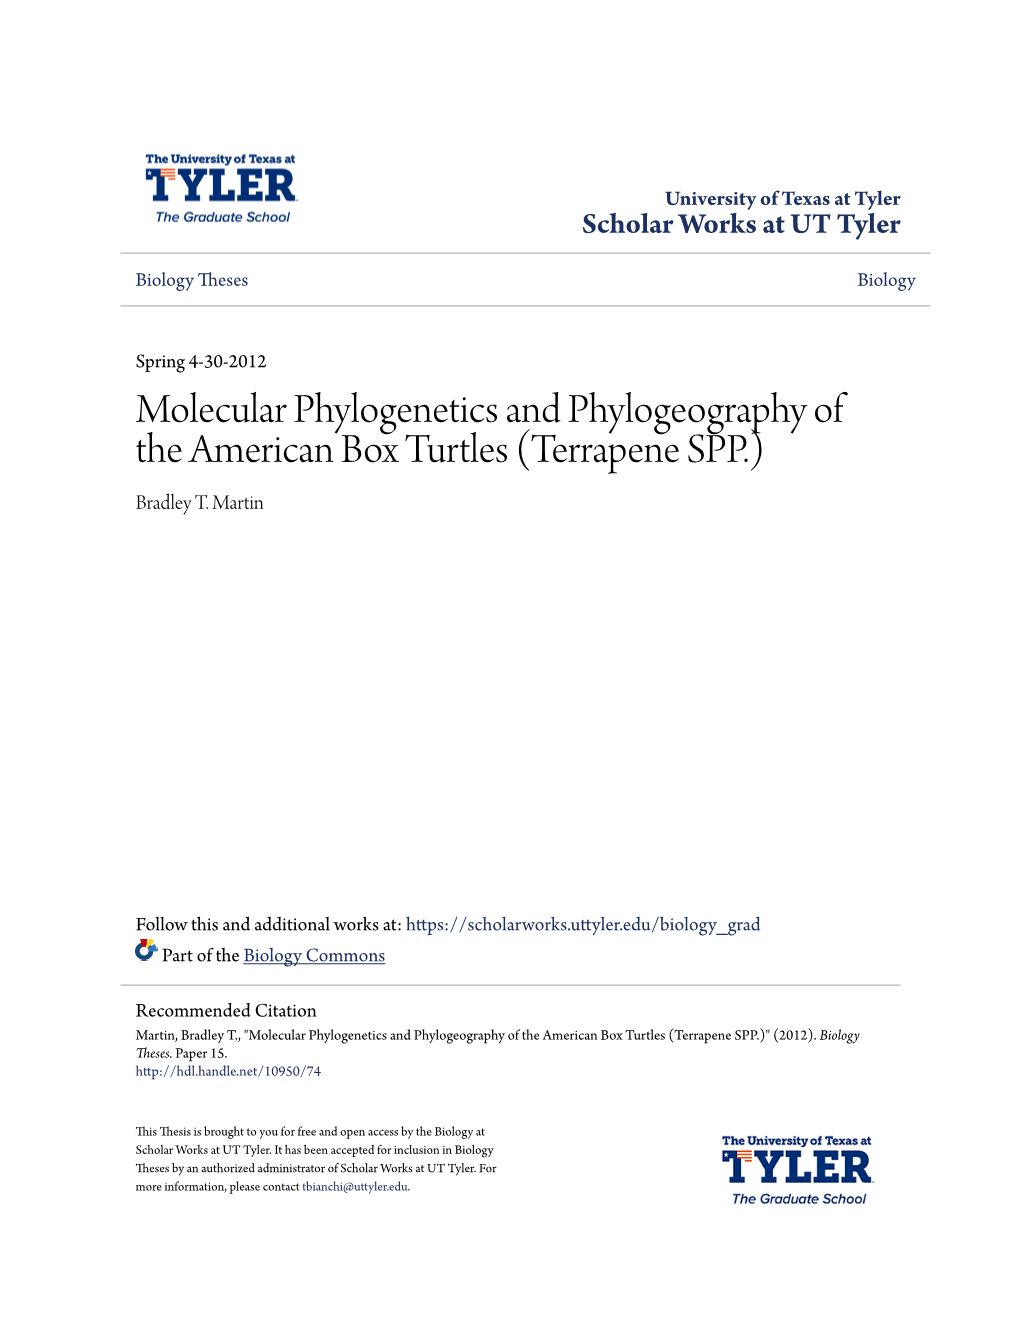 Molecular Phylogenetics and Phylogeography of the American Box Turtles (Terrapene SPP.) Bradley T